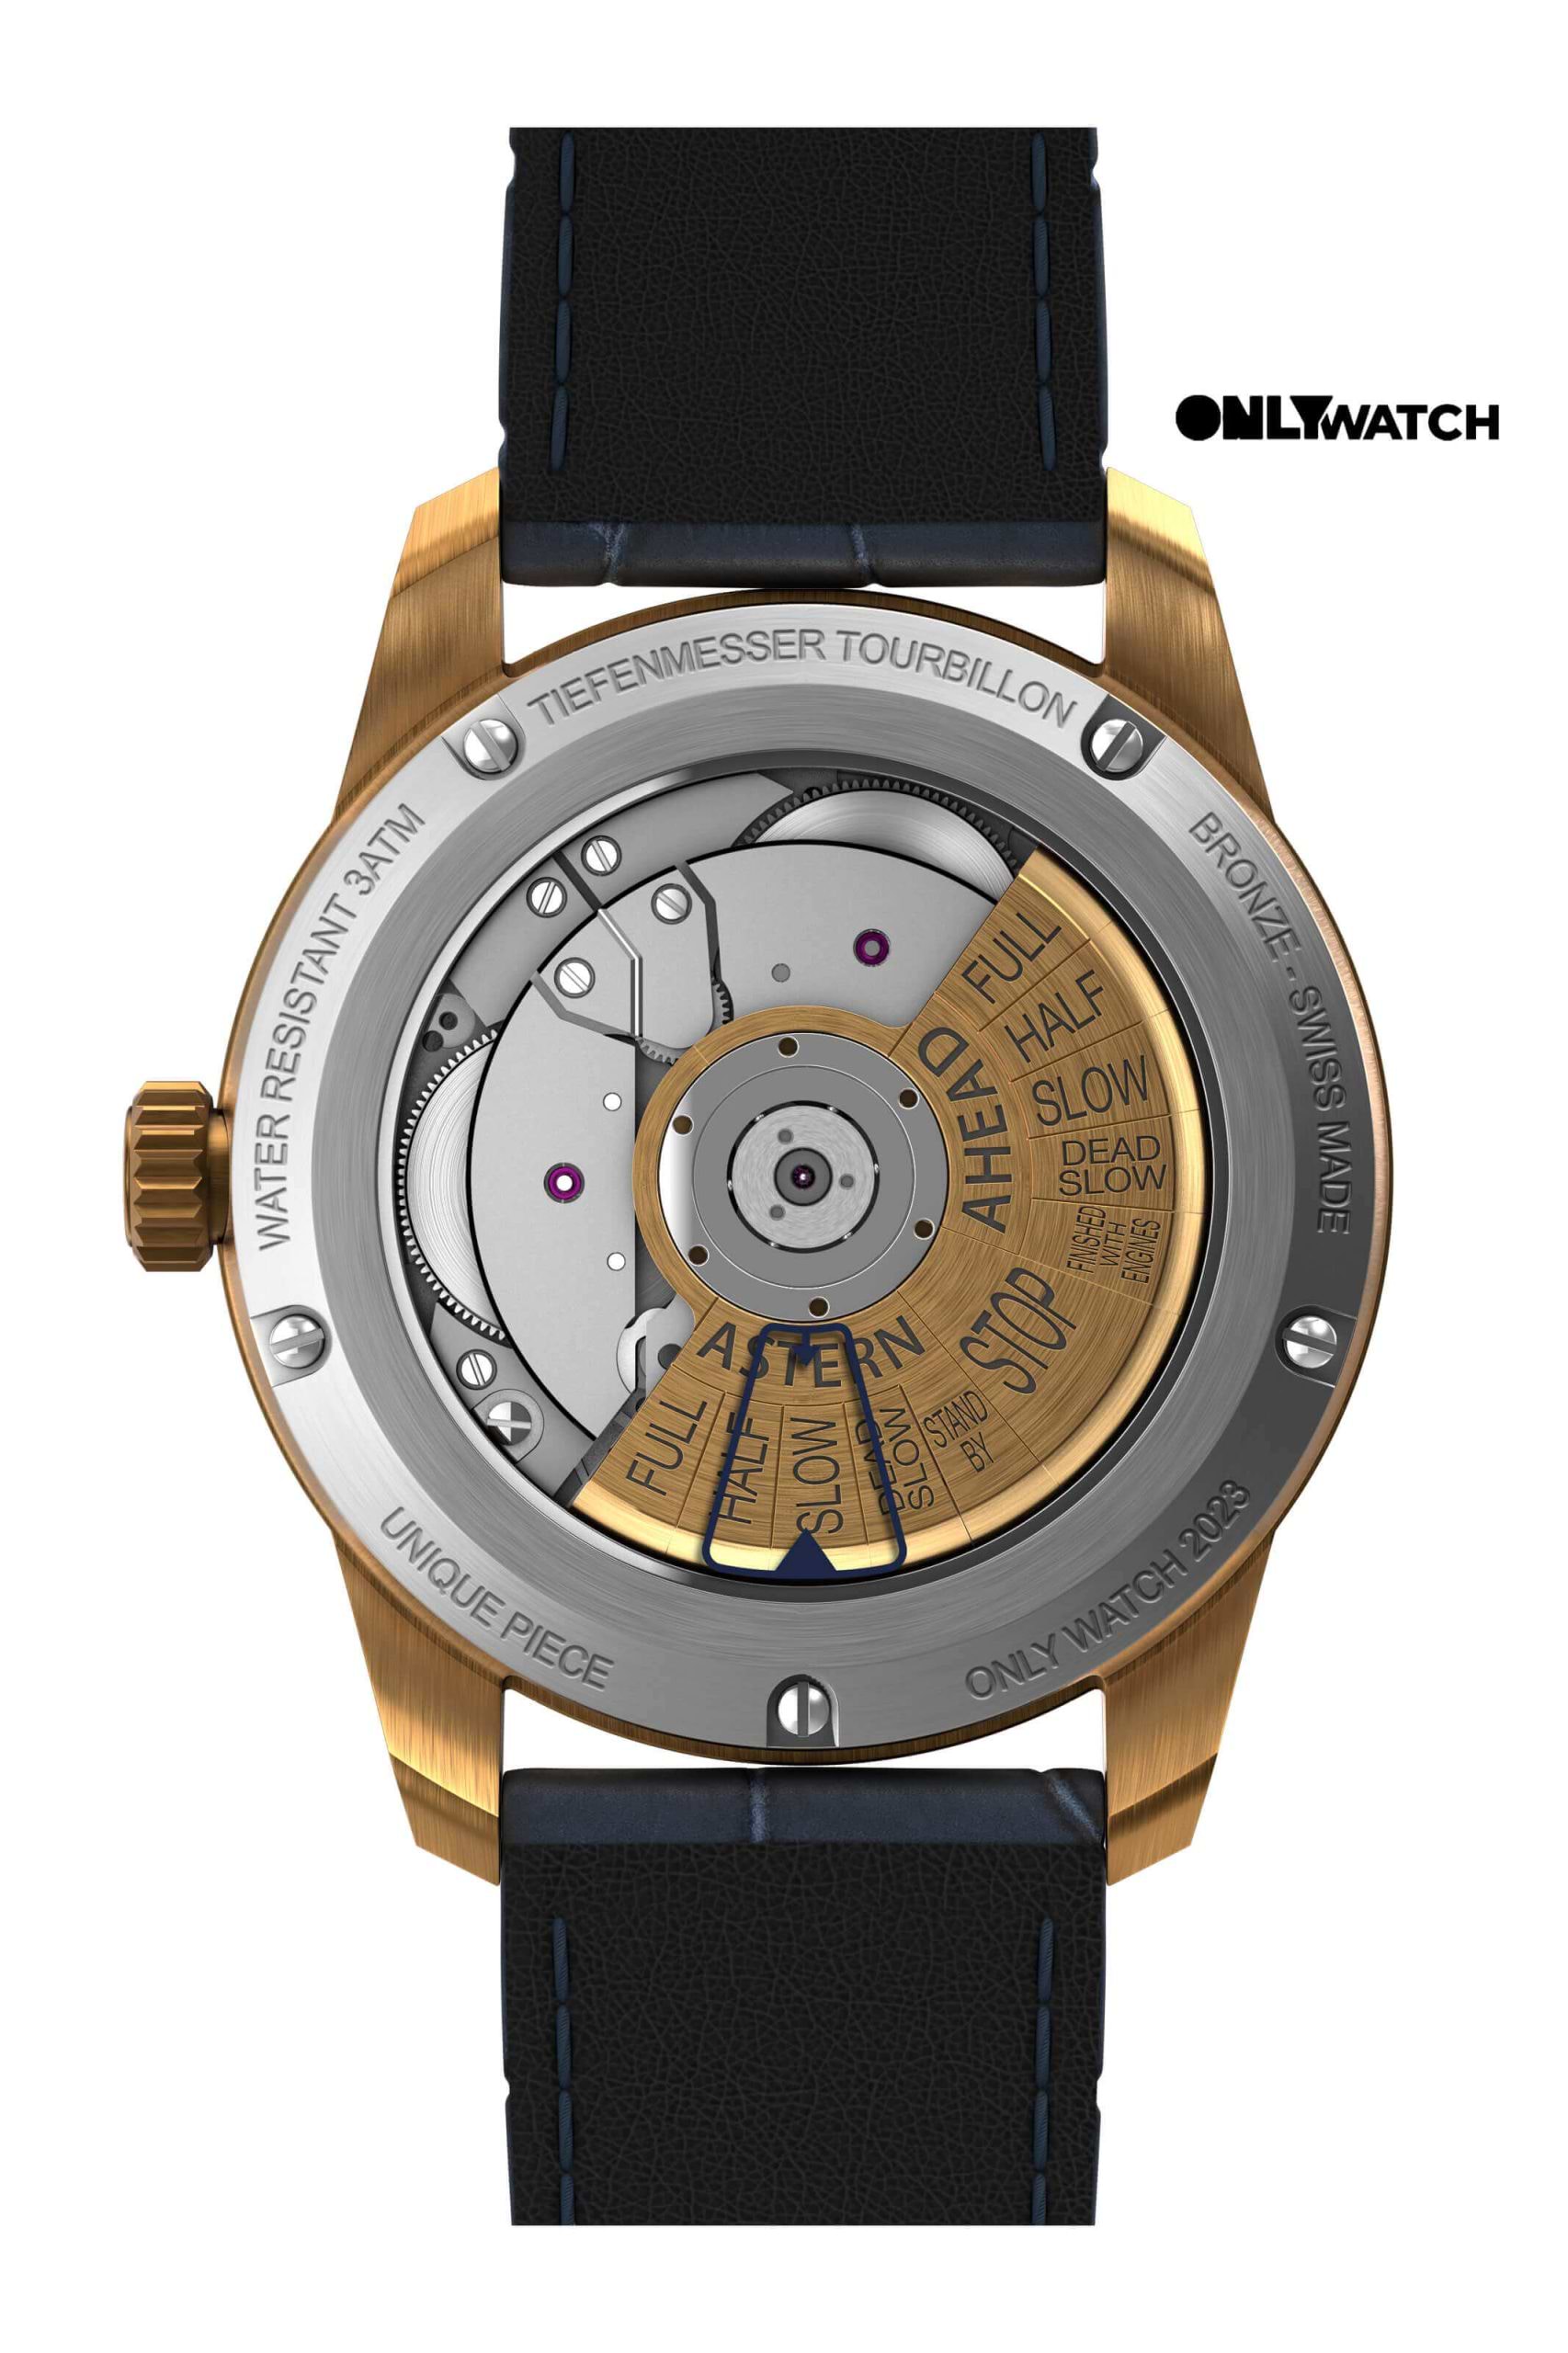 Luxurious Swissmade Tourbillon Tiefenmesser Watch in Medium Brown, Light Cream, and Light Grey.